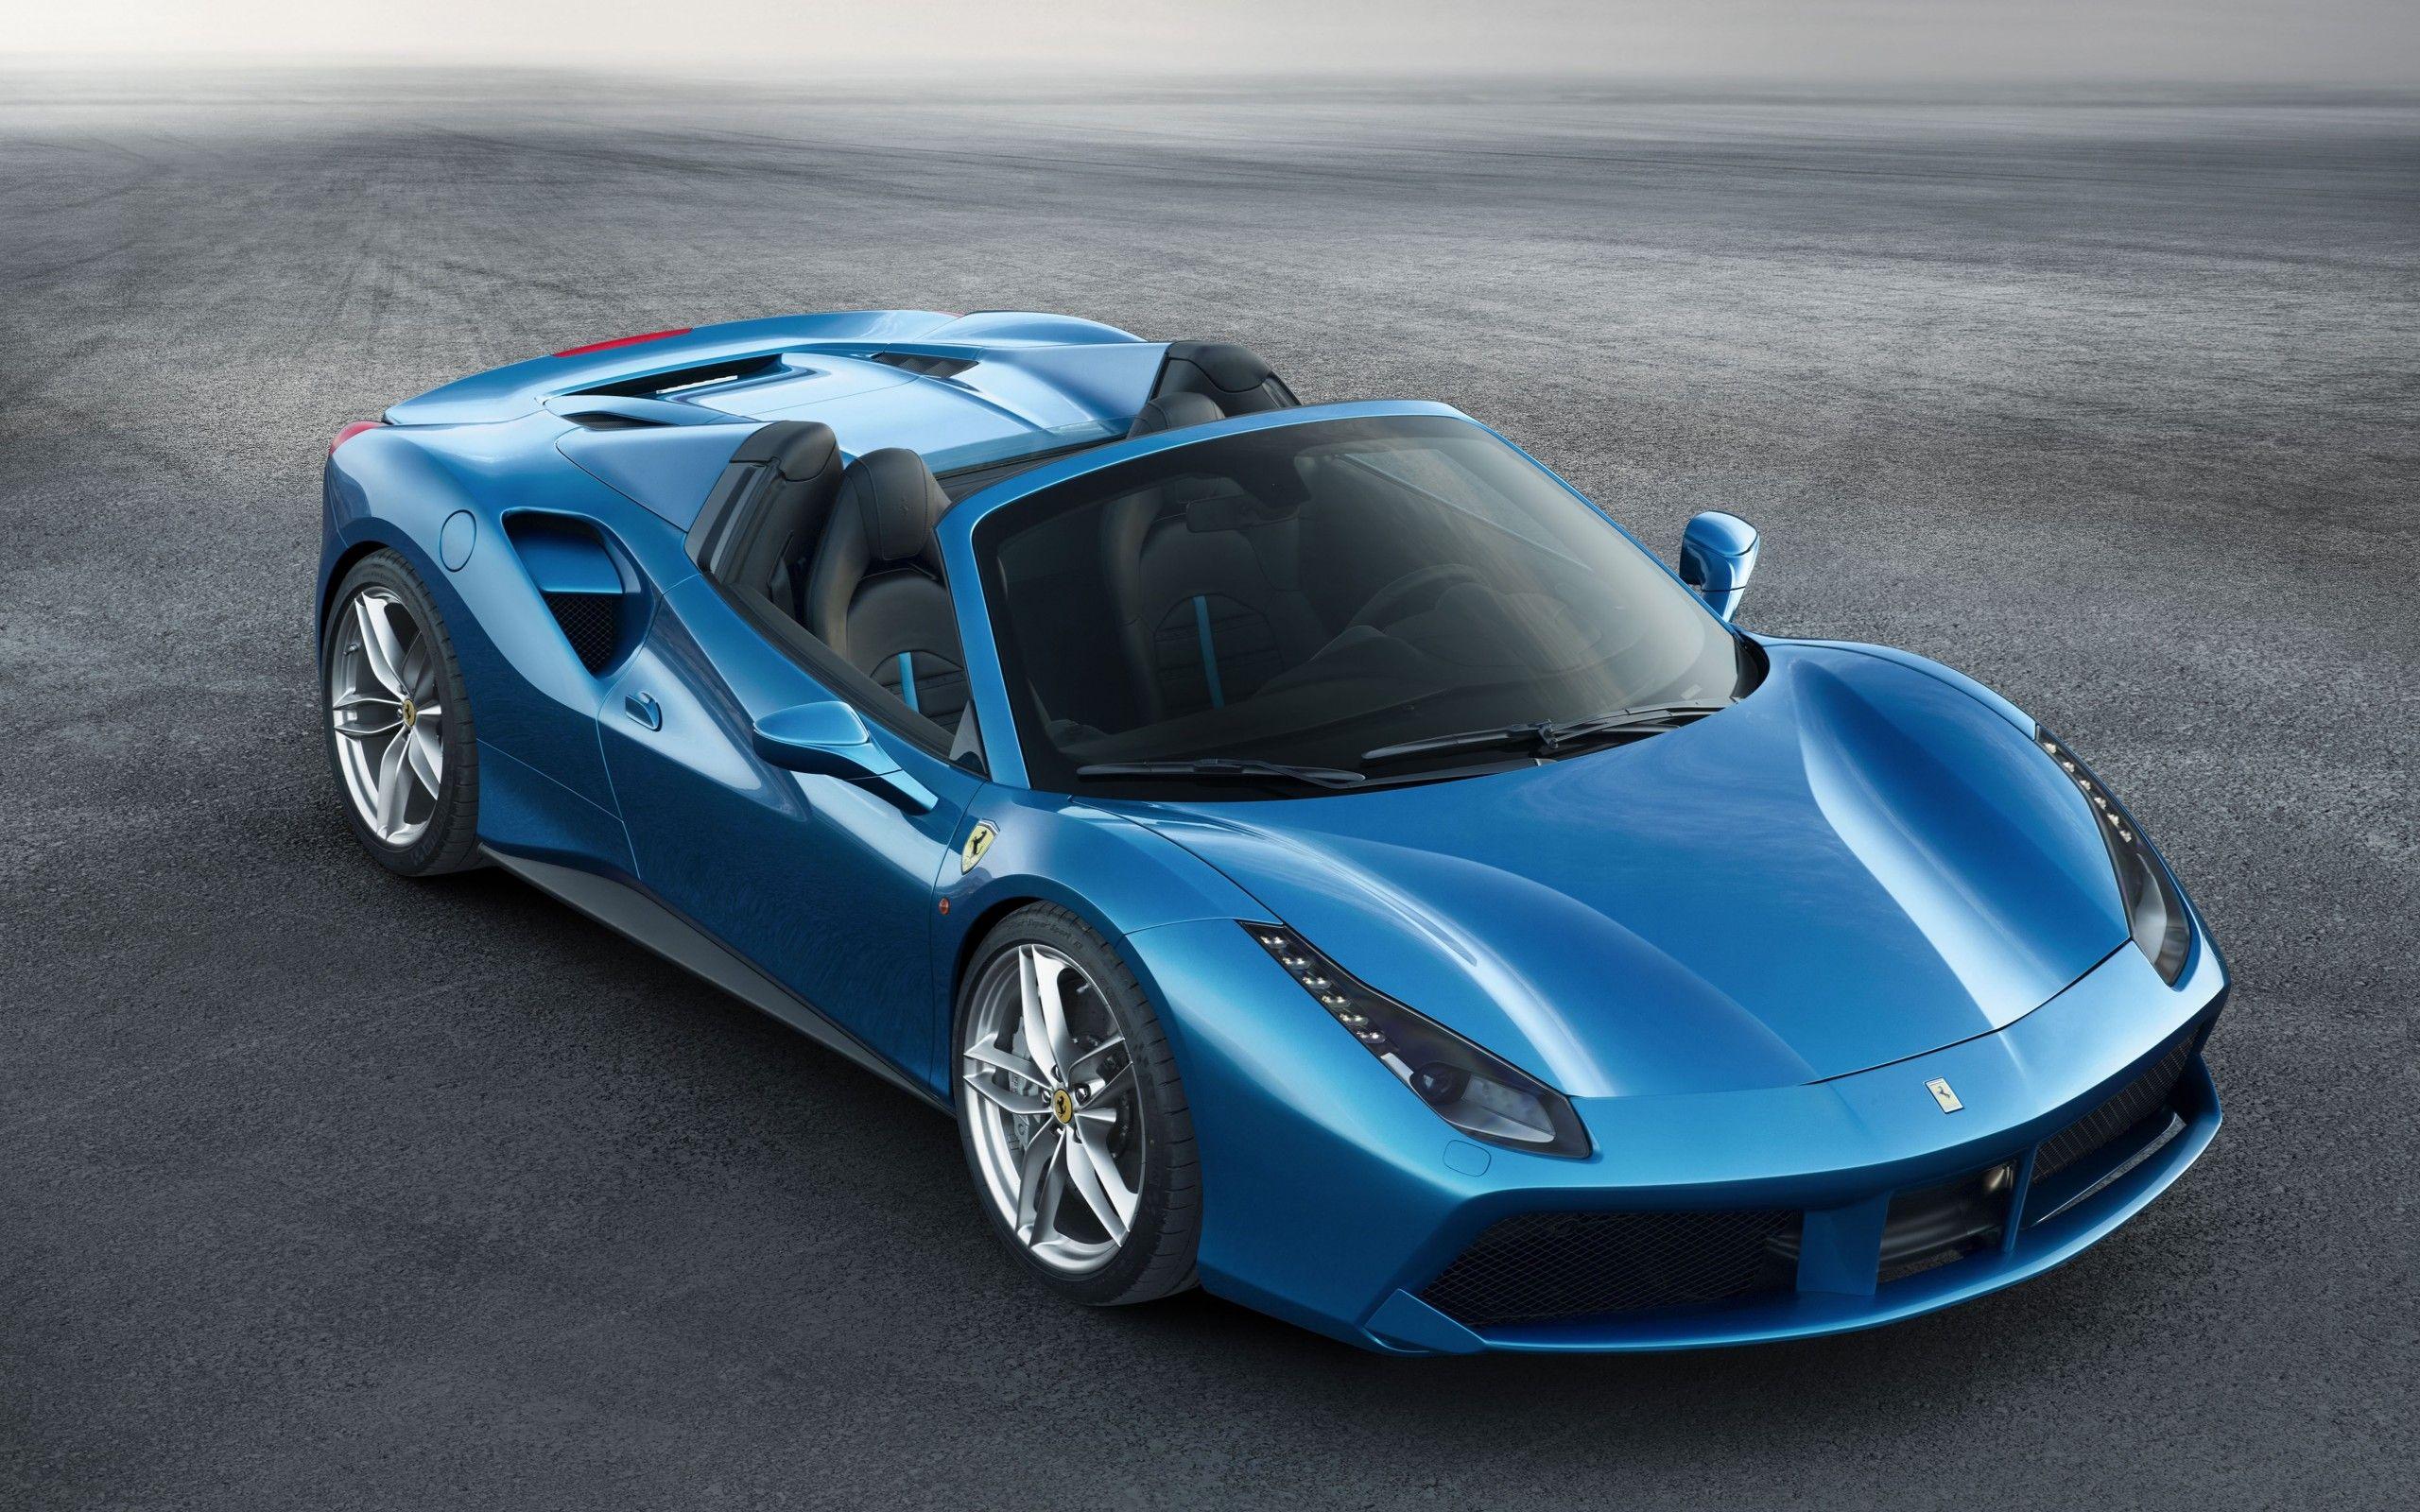 Download 2560x1600 Ferrari 488 Spider, Blue, Supercar, Cars